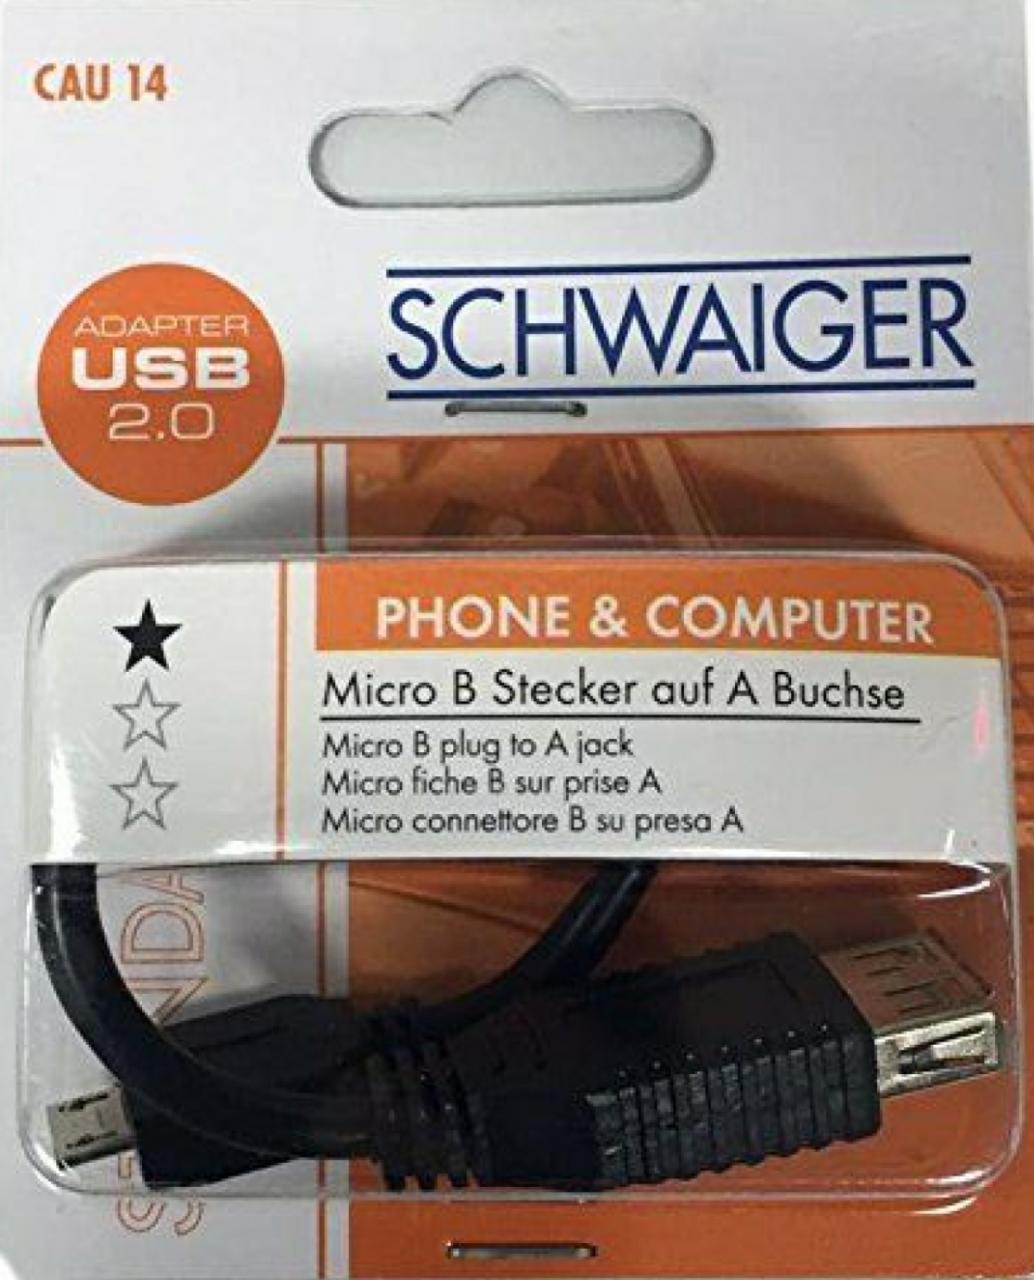 adapter Cable USB 2.0 OTG USB A - Micro B CAU 14 Schwaiger Neu OVP